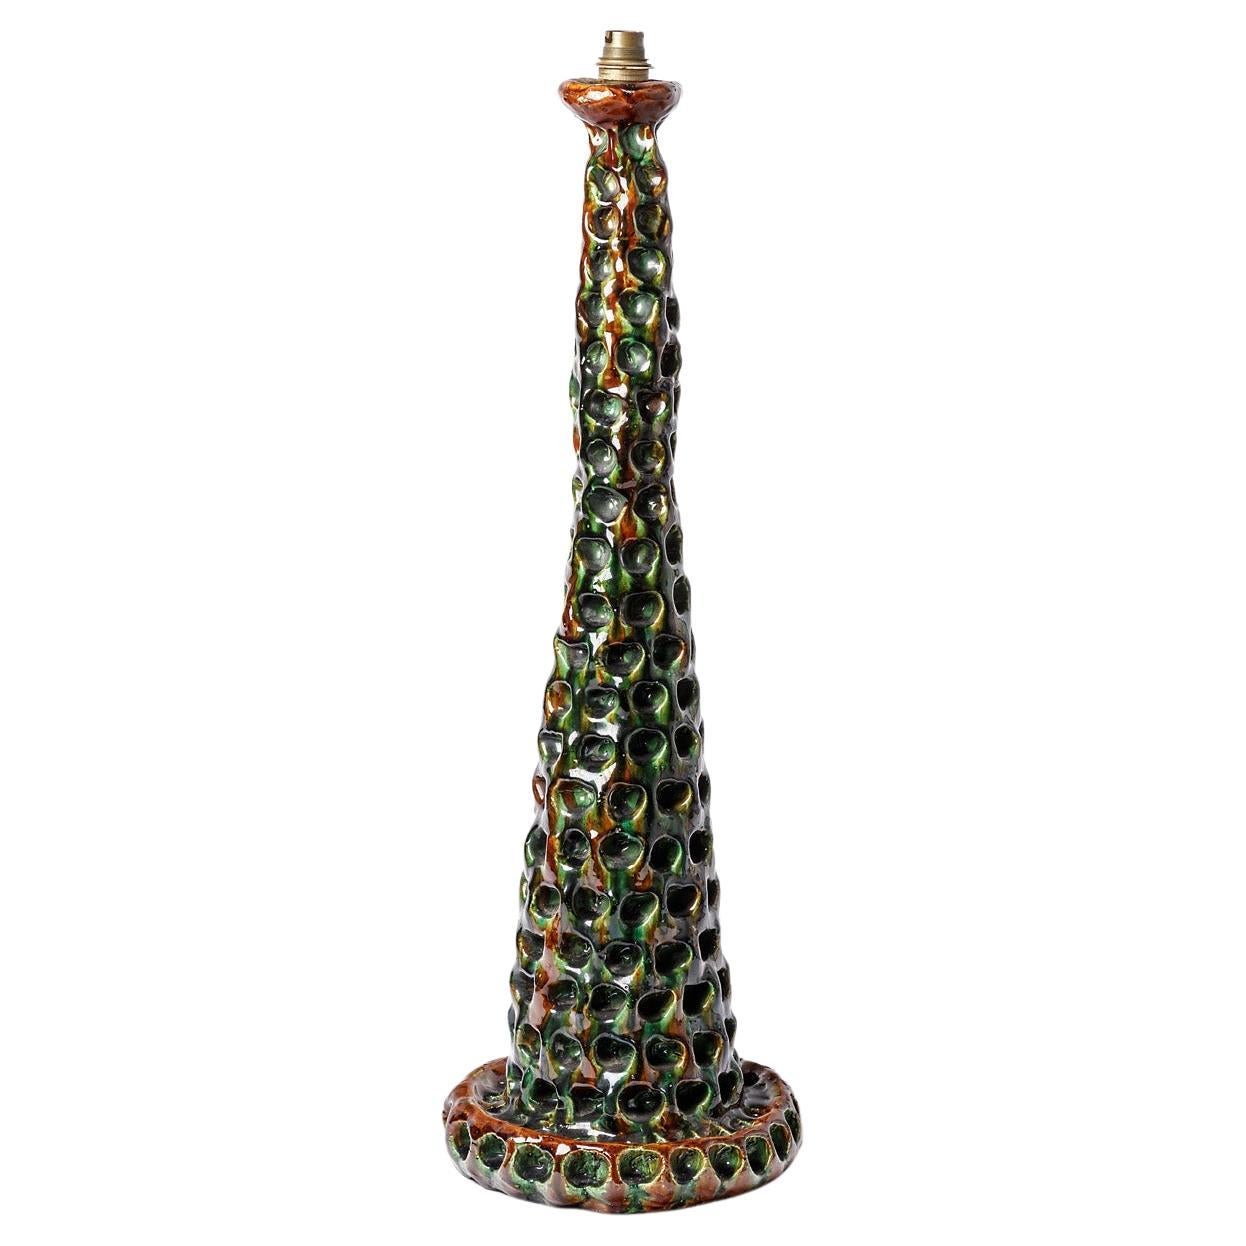 large 20th century colored ceramic table lamp by Gerlou 1950 unique piece 68 cm